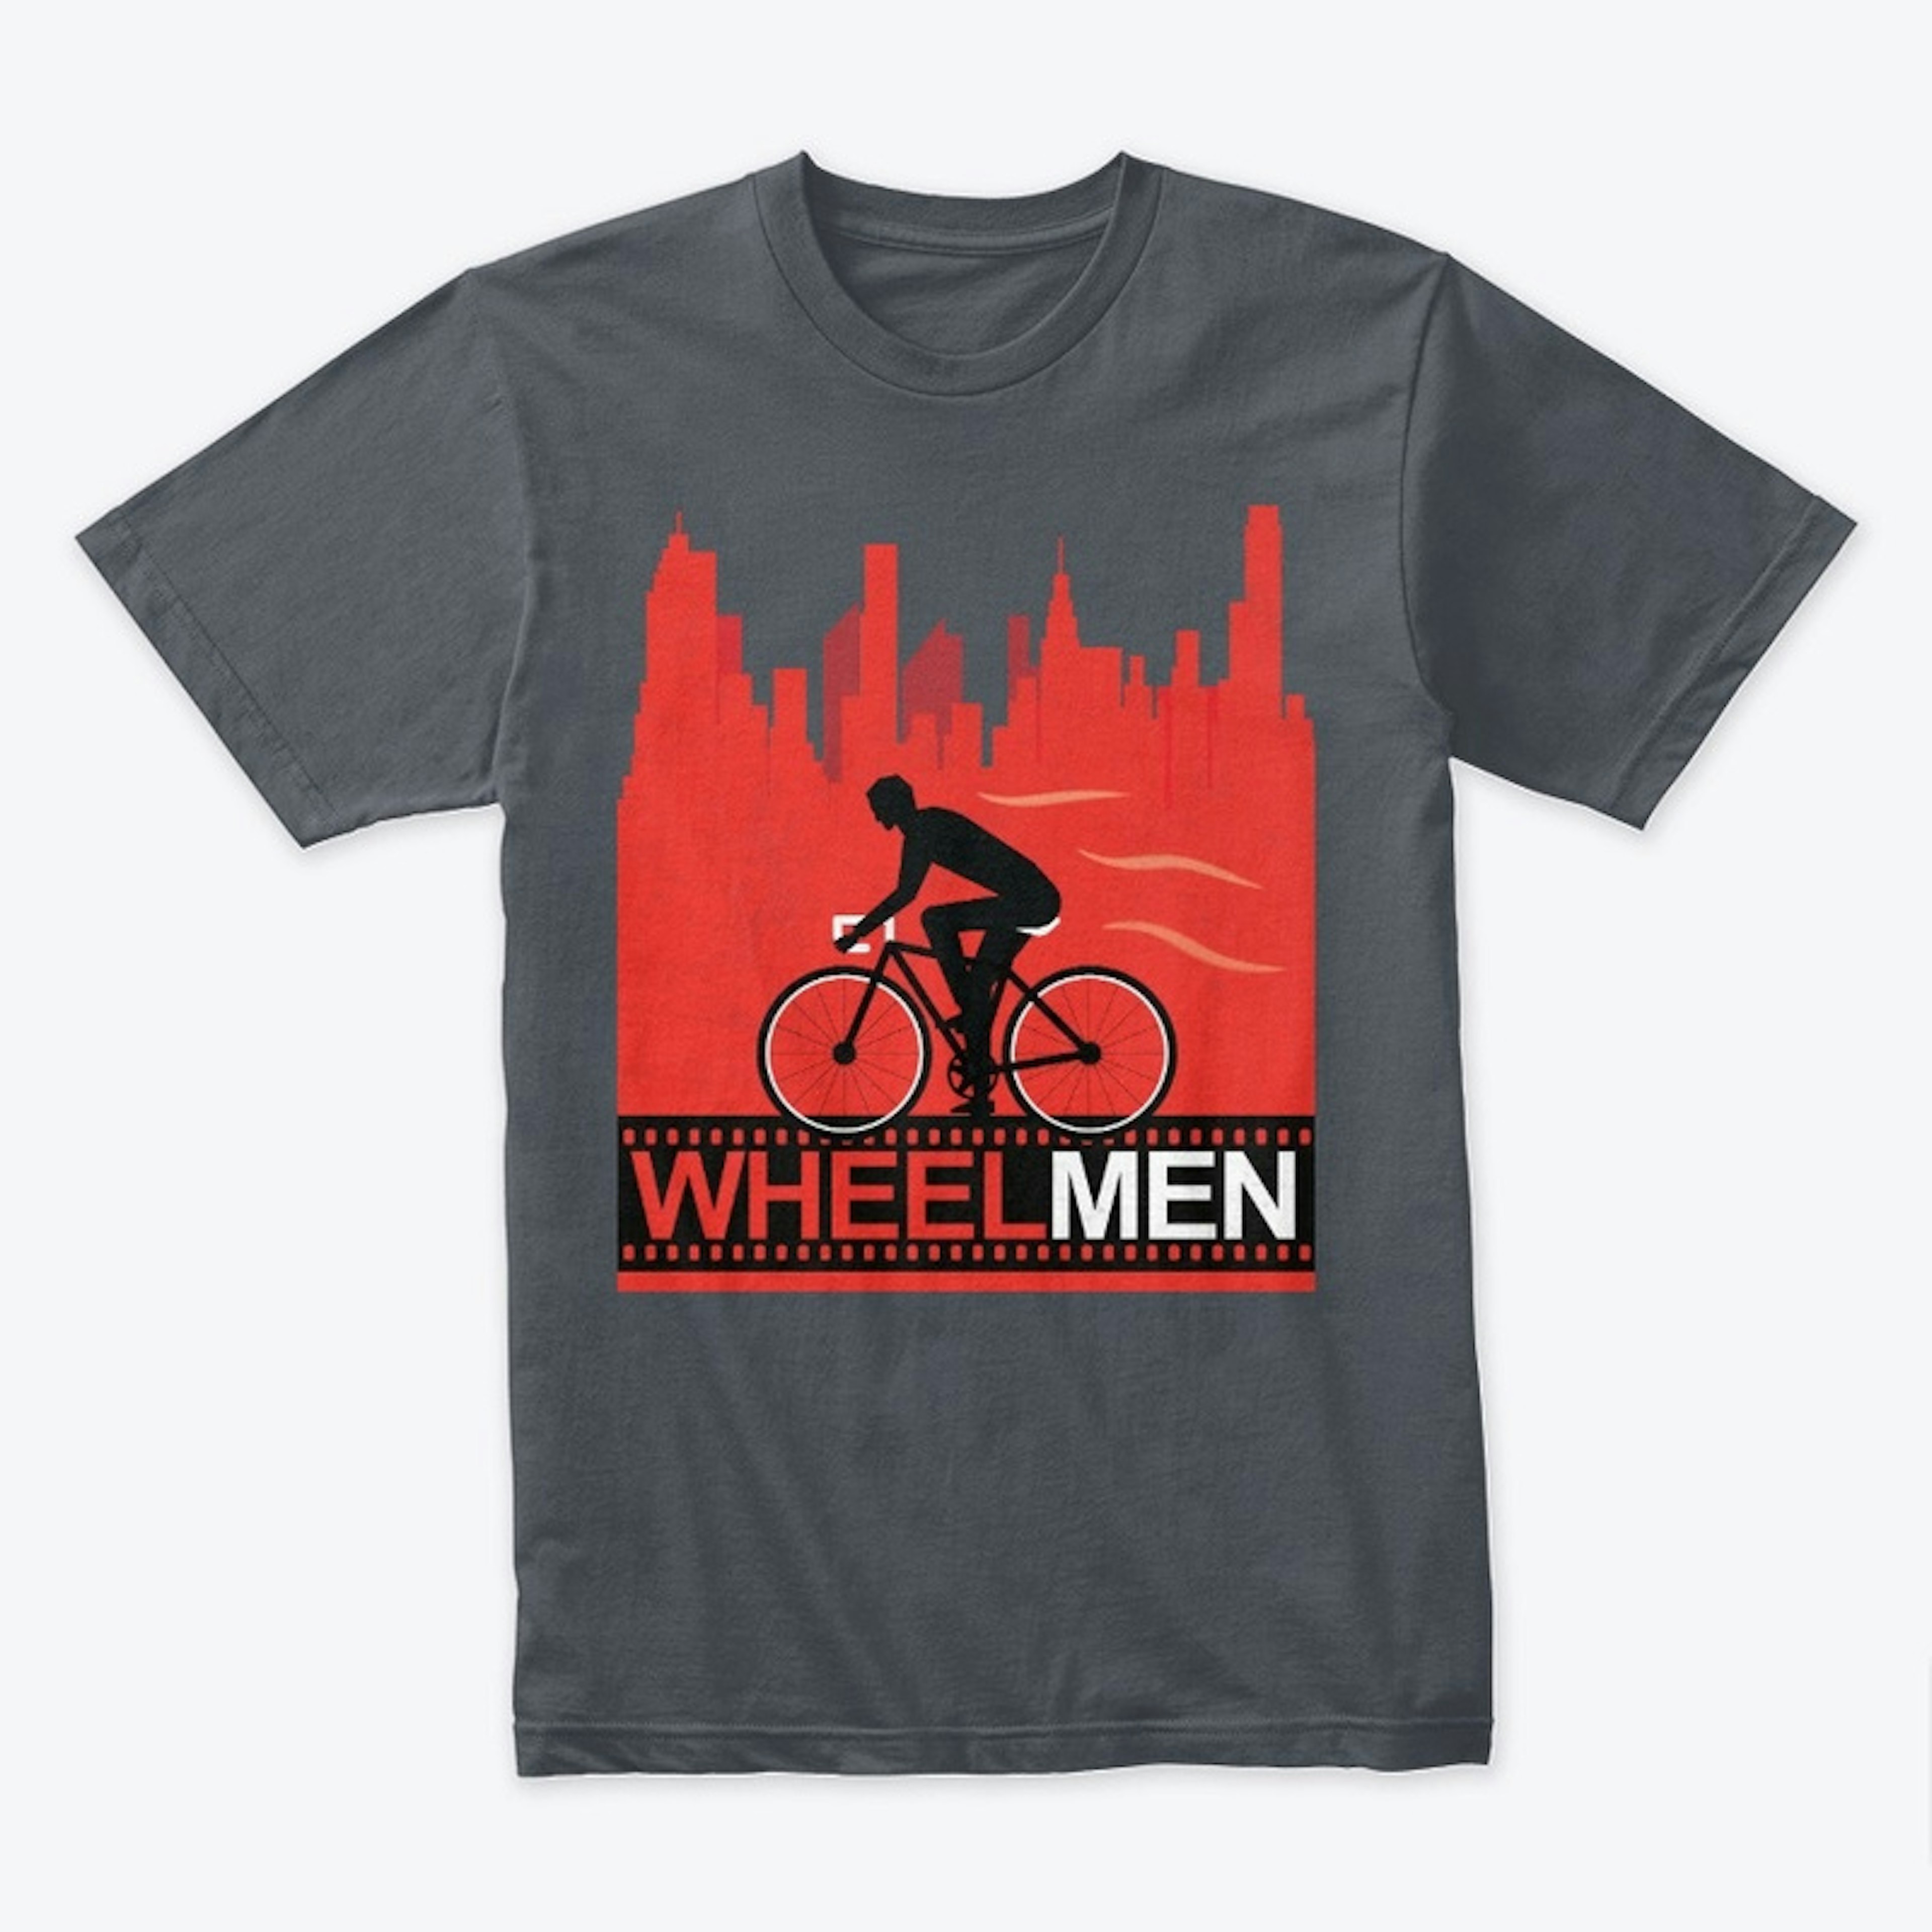 Wheel Men Bike Tee